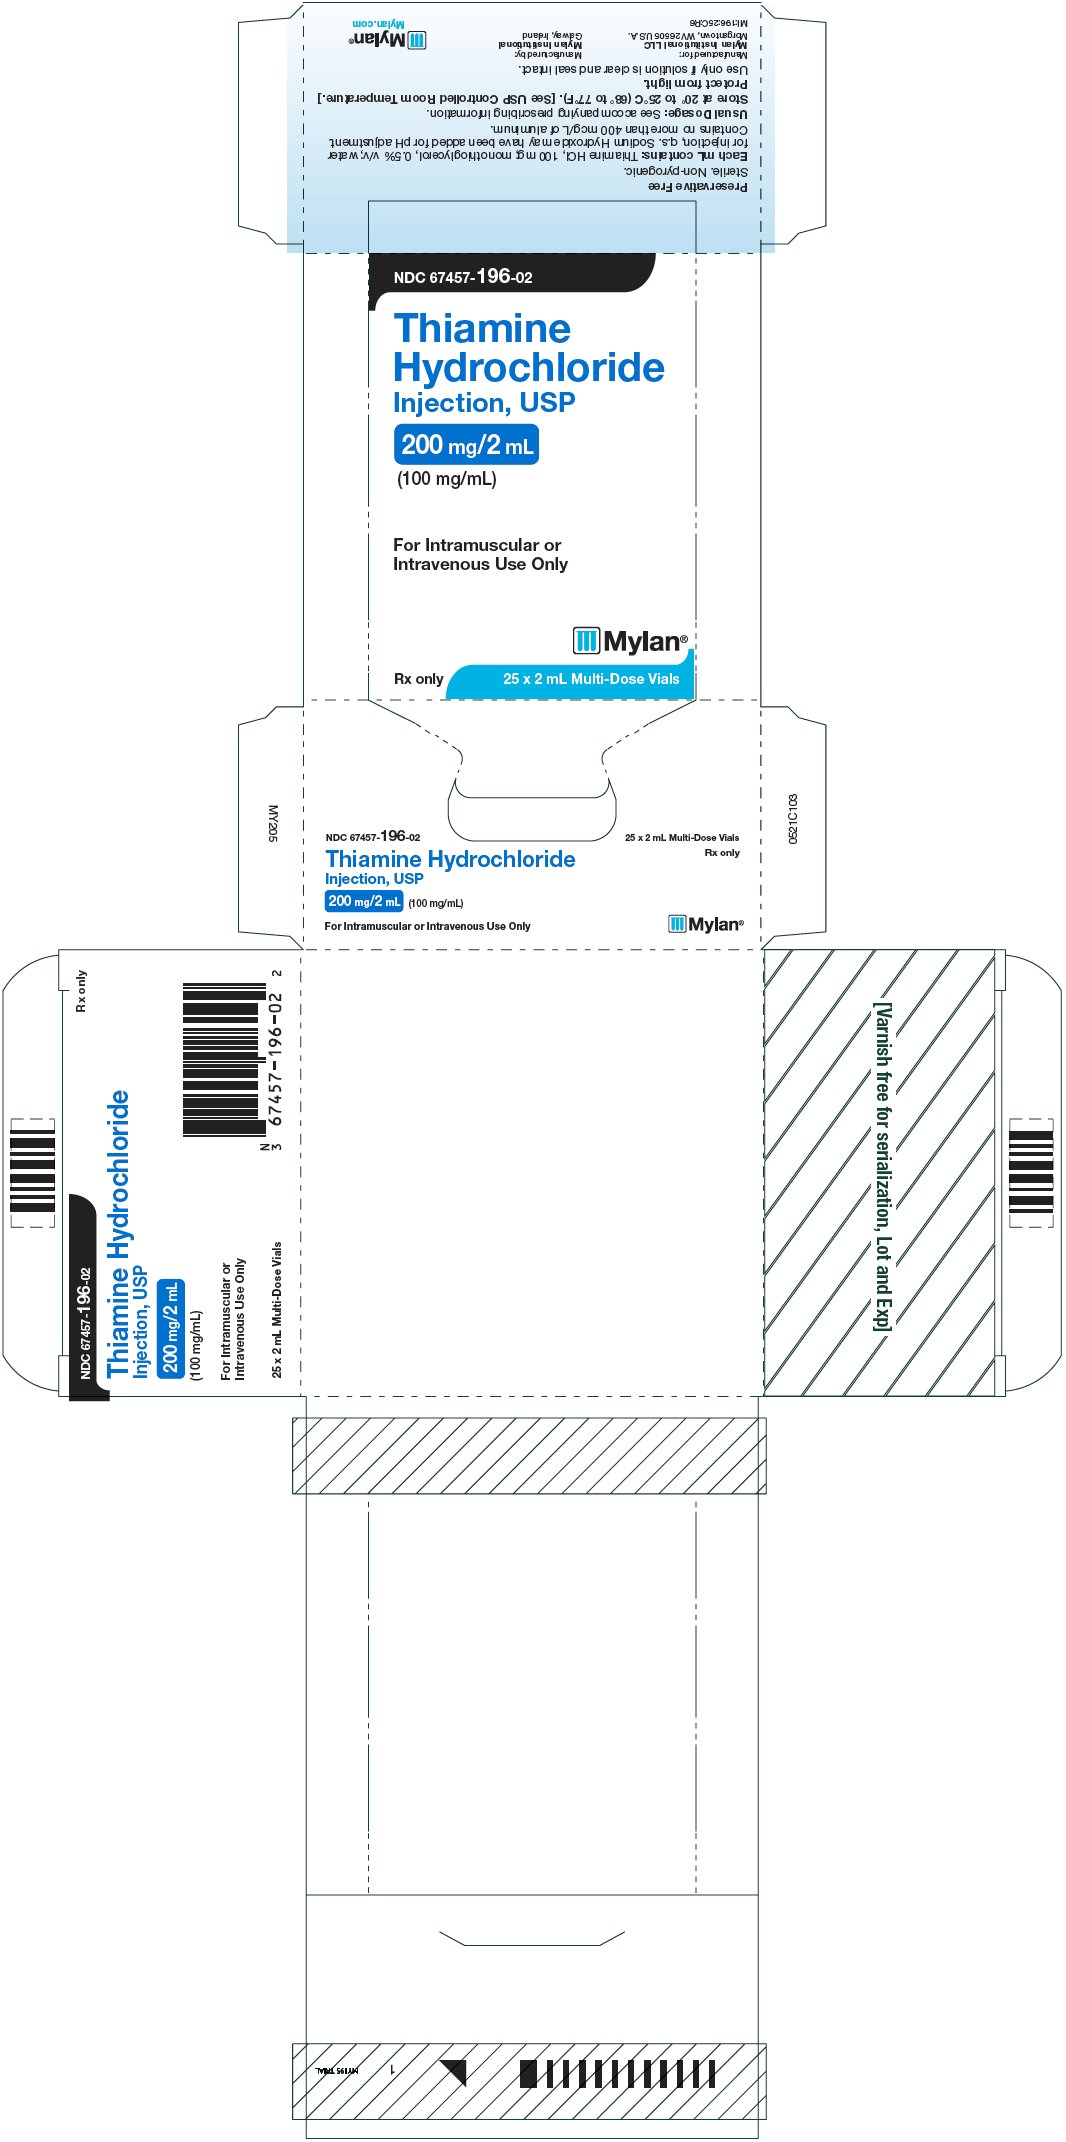 Thiamine Hydrochlordie Injection, USP 200 mg/2 mL Carton Label